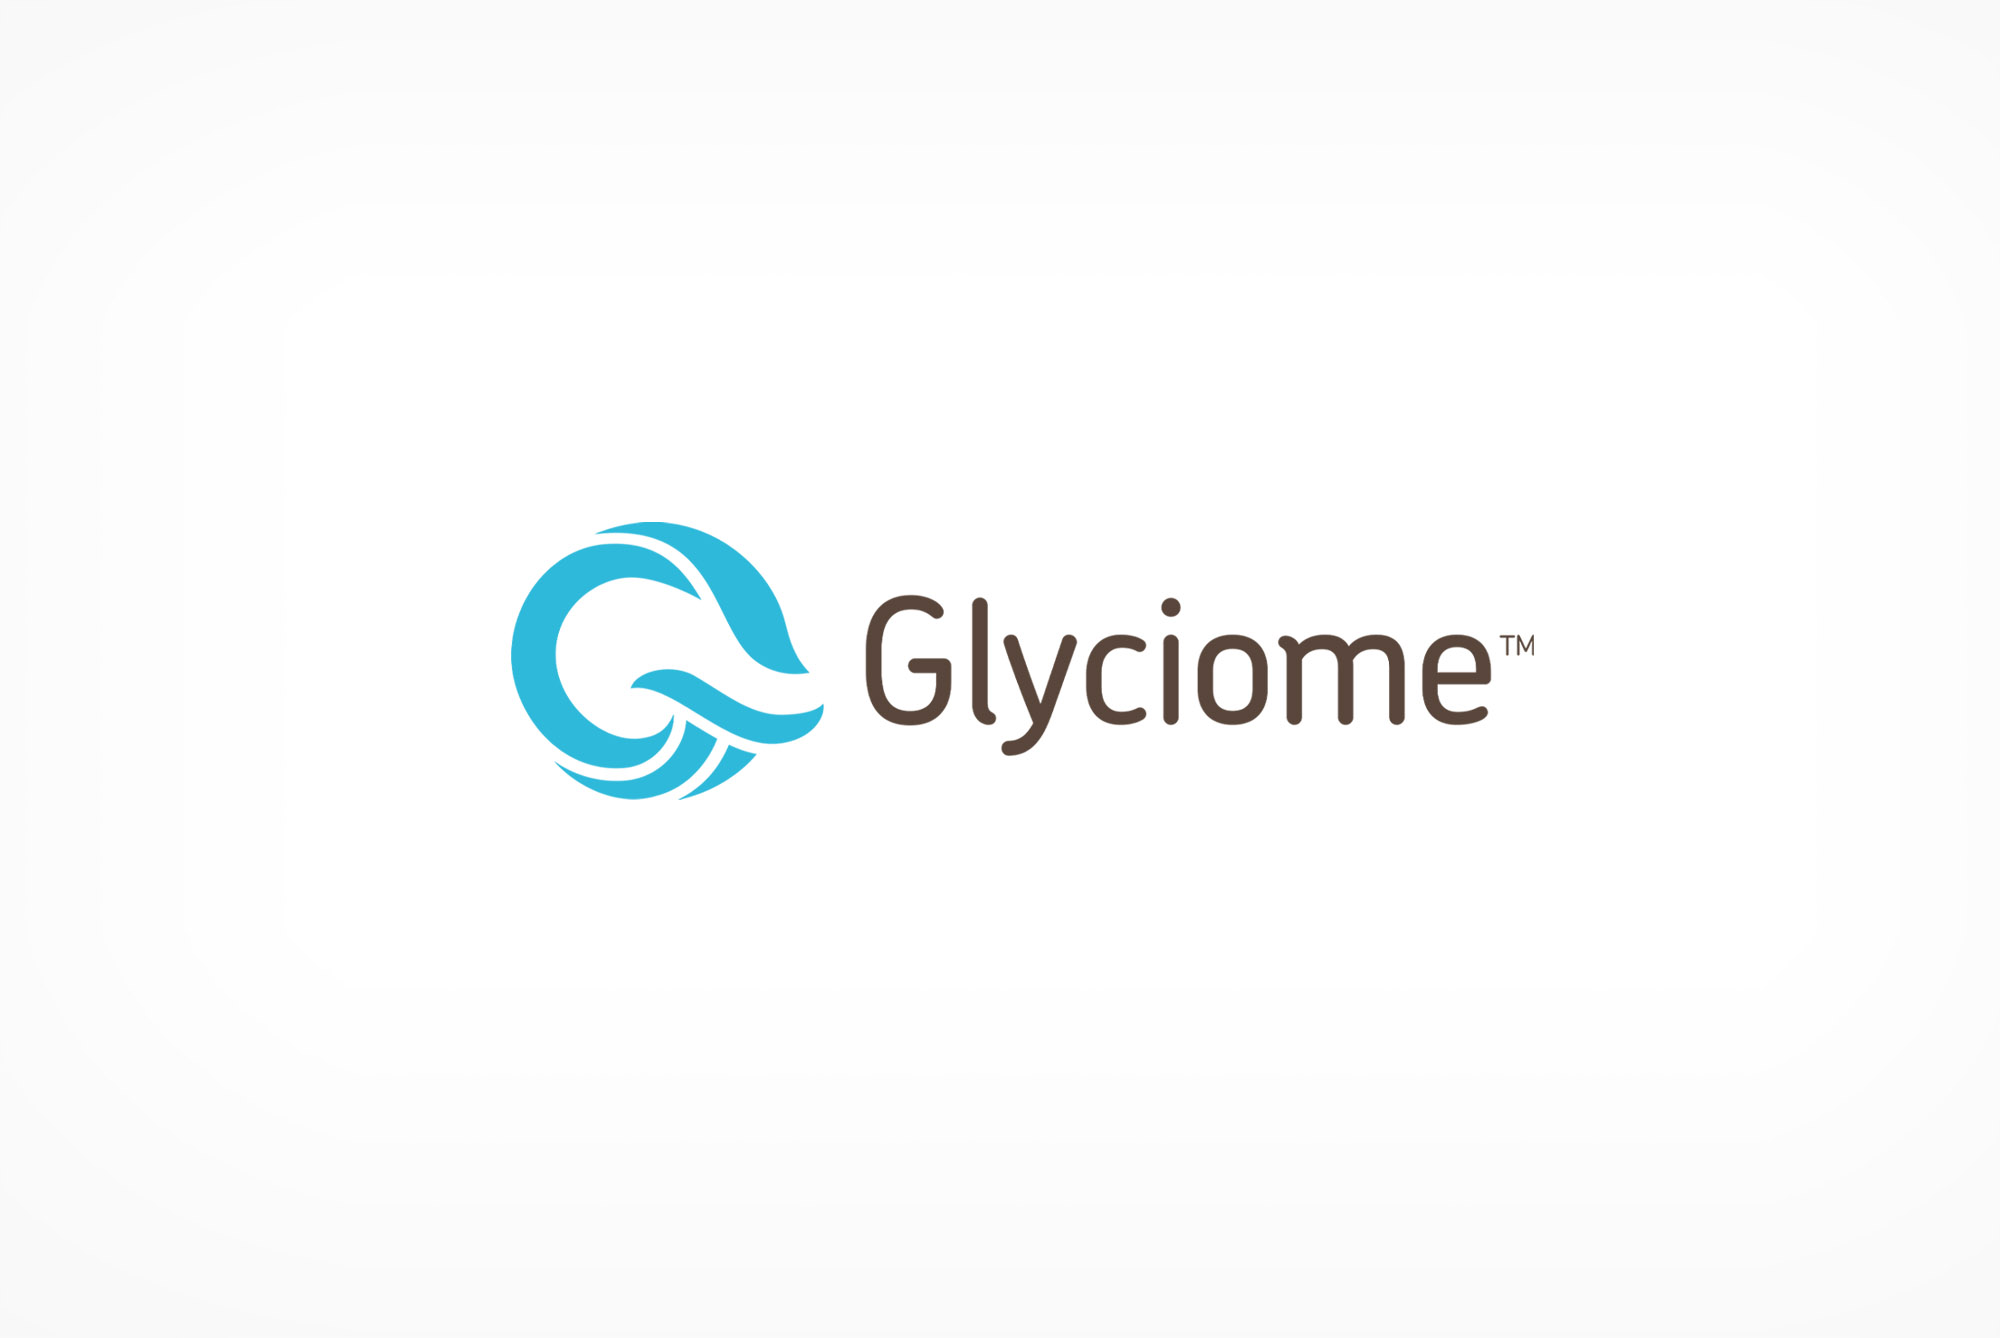 Glyciome brand logo.